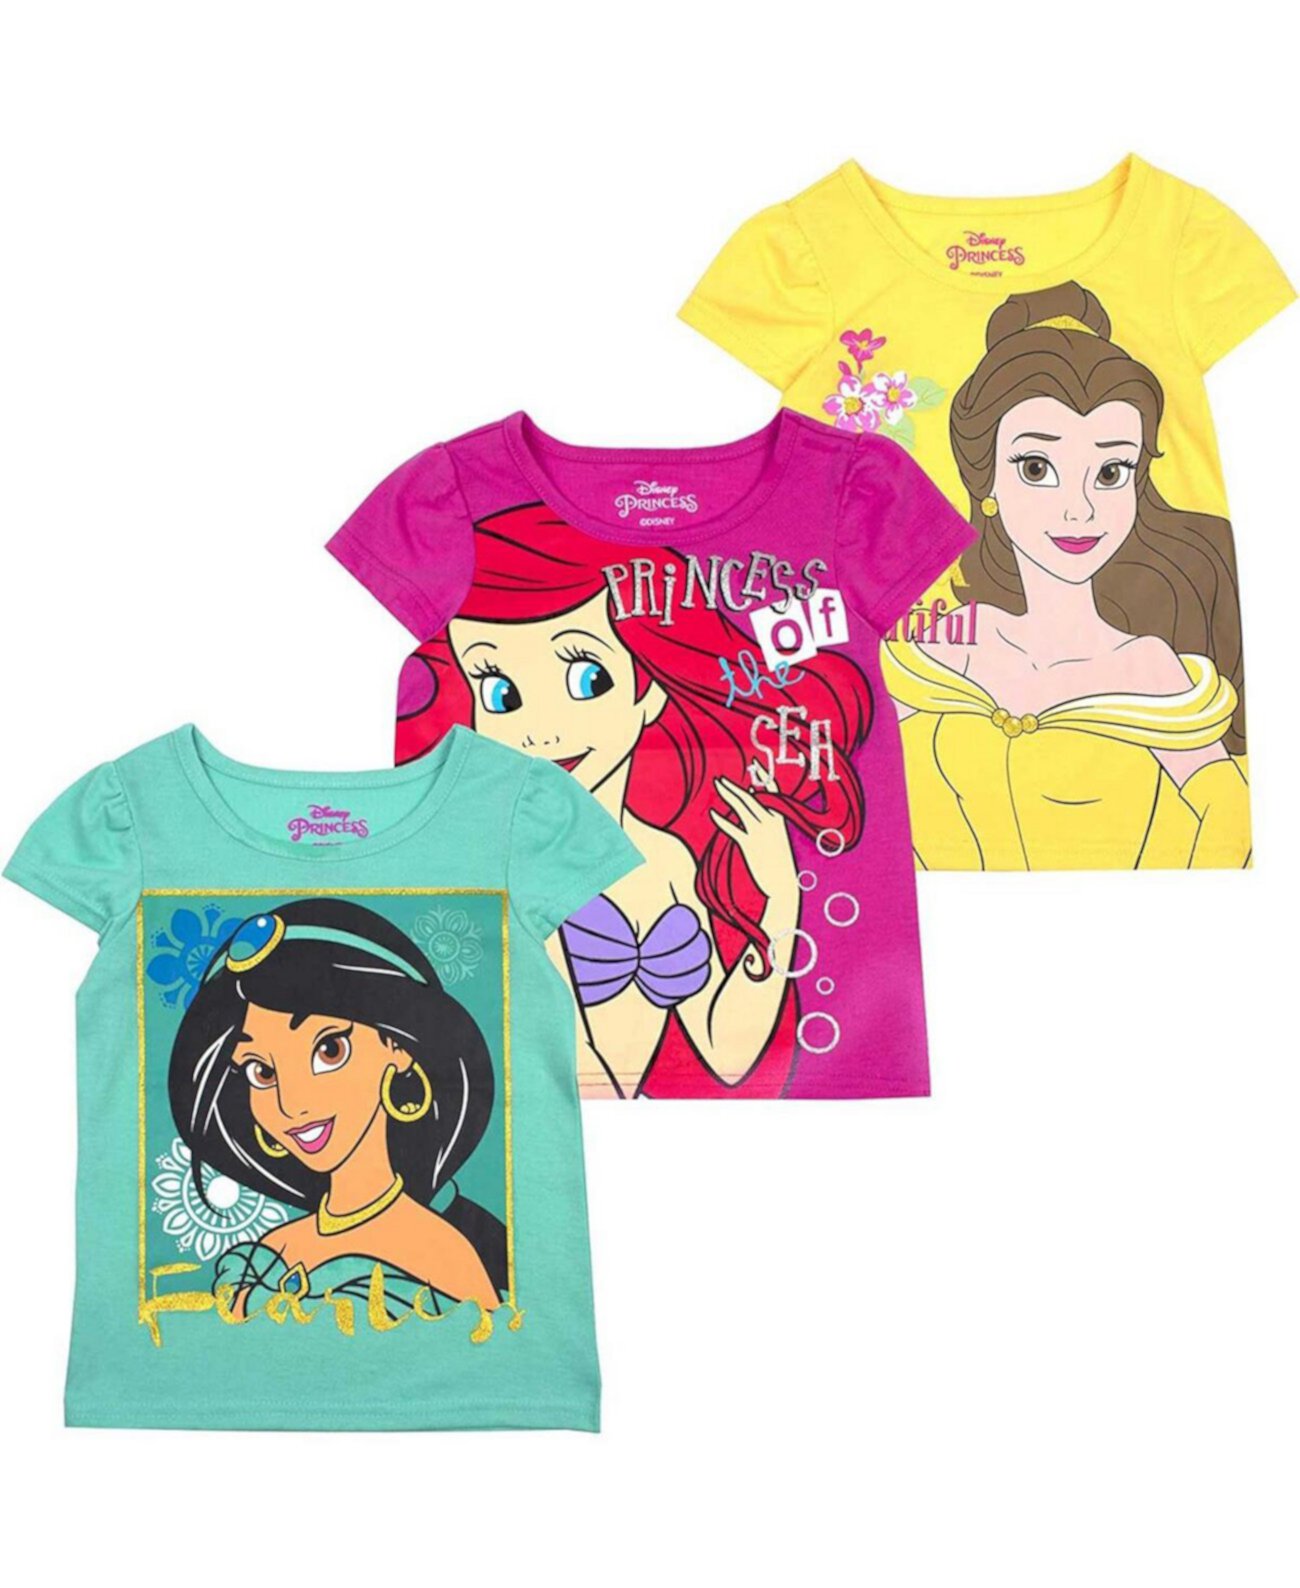 Toddler Boys and Girls Yellow, Pink, Green Disney Princess Graphic 3-Pack T-shirt Set Children's Apparel Network